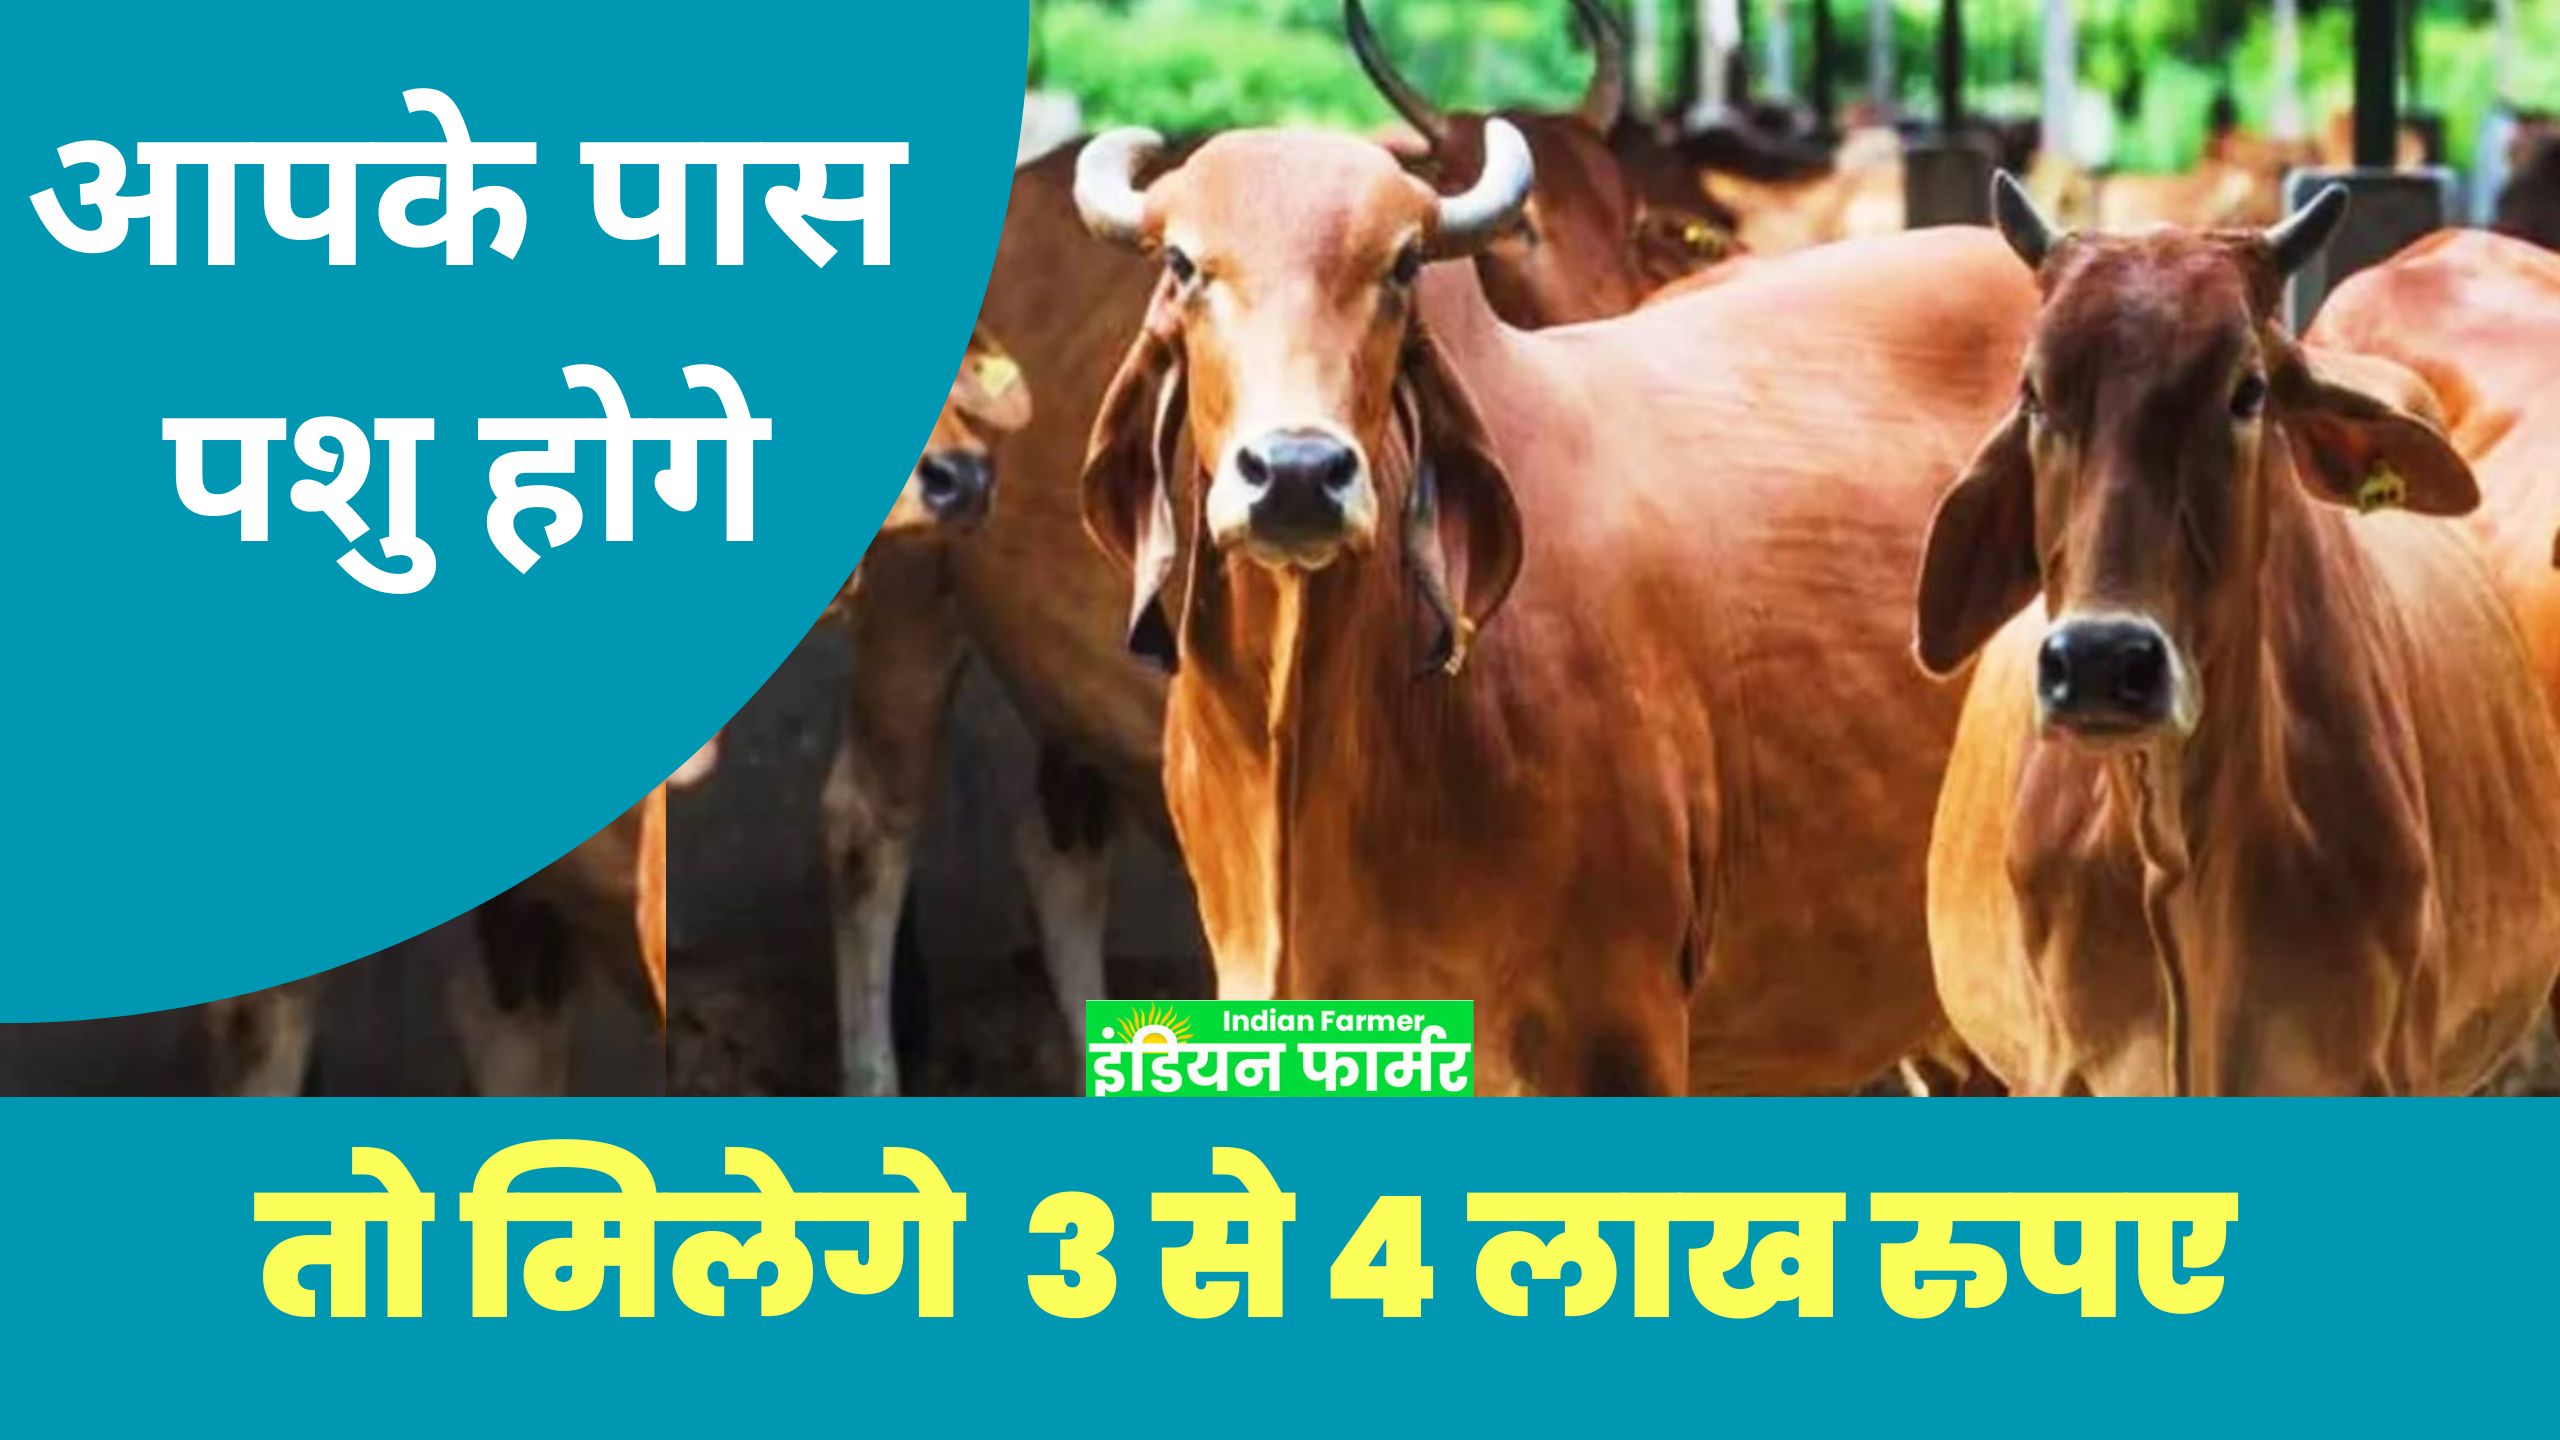 Pashu Kisan Credit Card Yojana : पशु किसान क्रेडिट कार्ड योजना के तहत पशुपालको को मिलेंगे 3 से 4 लाख रुपए ?